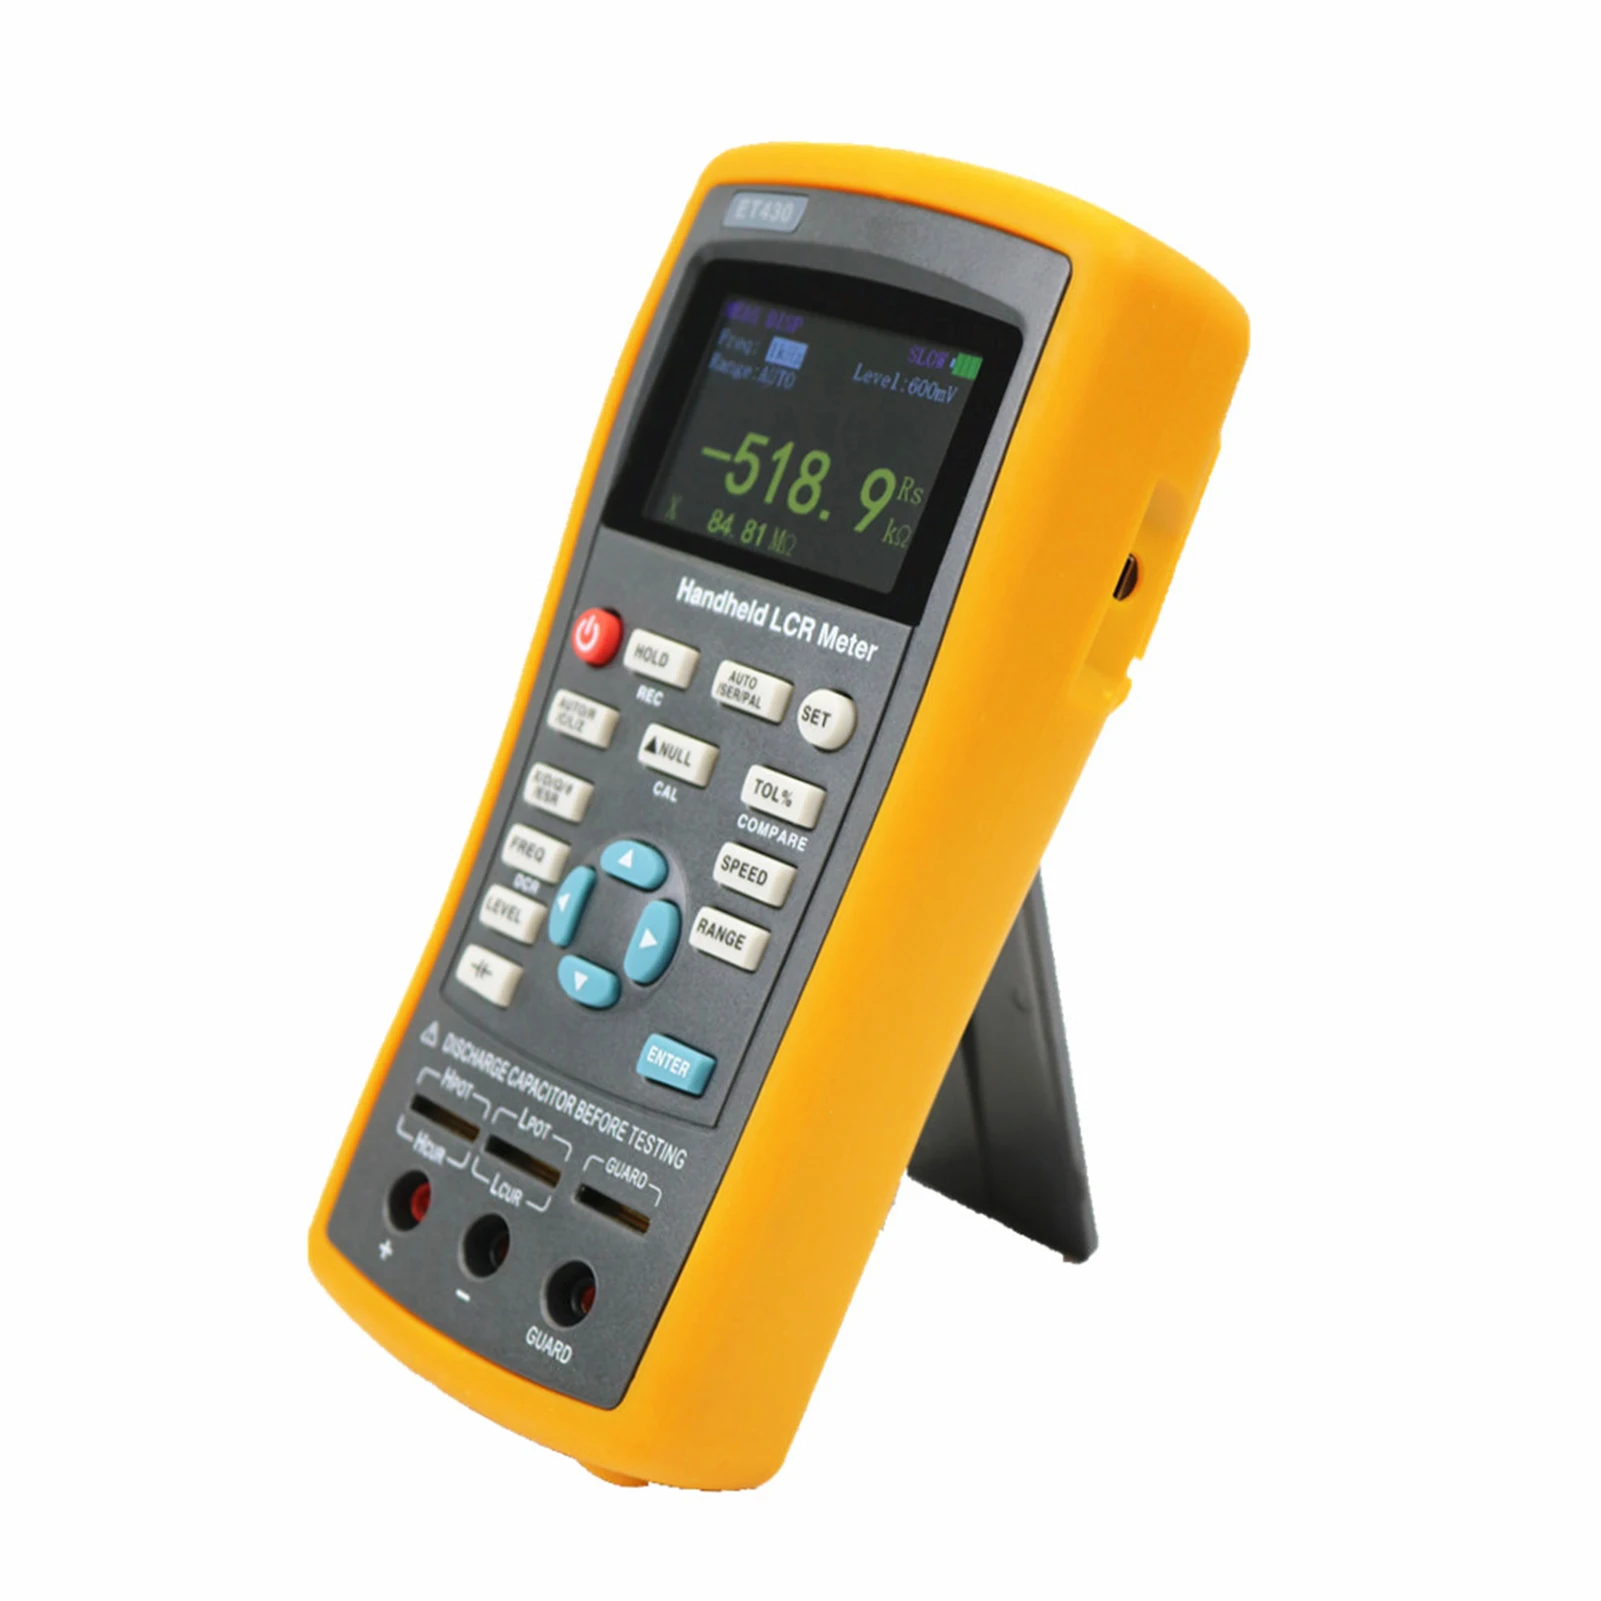 /-0.2% Accuracy Multi Tester Instruments Digital LCR Bridge Handheld LCR Meter with Backlight Display ET430 Resistance Electrolytic Capacitance Measuring Handheld LCR Bridge 